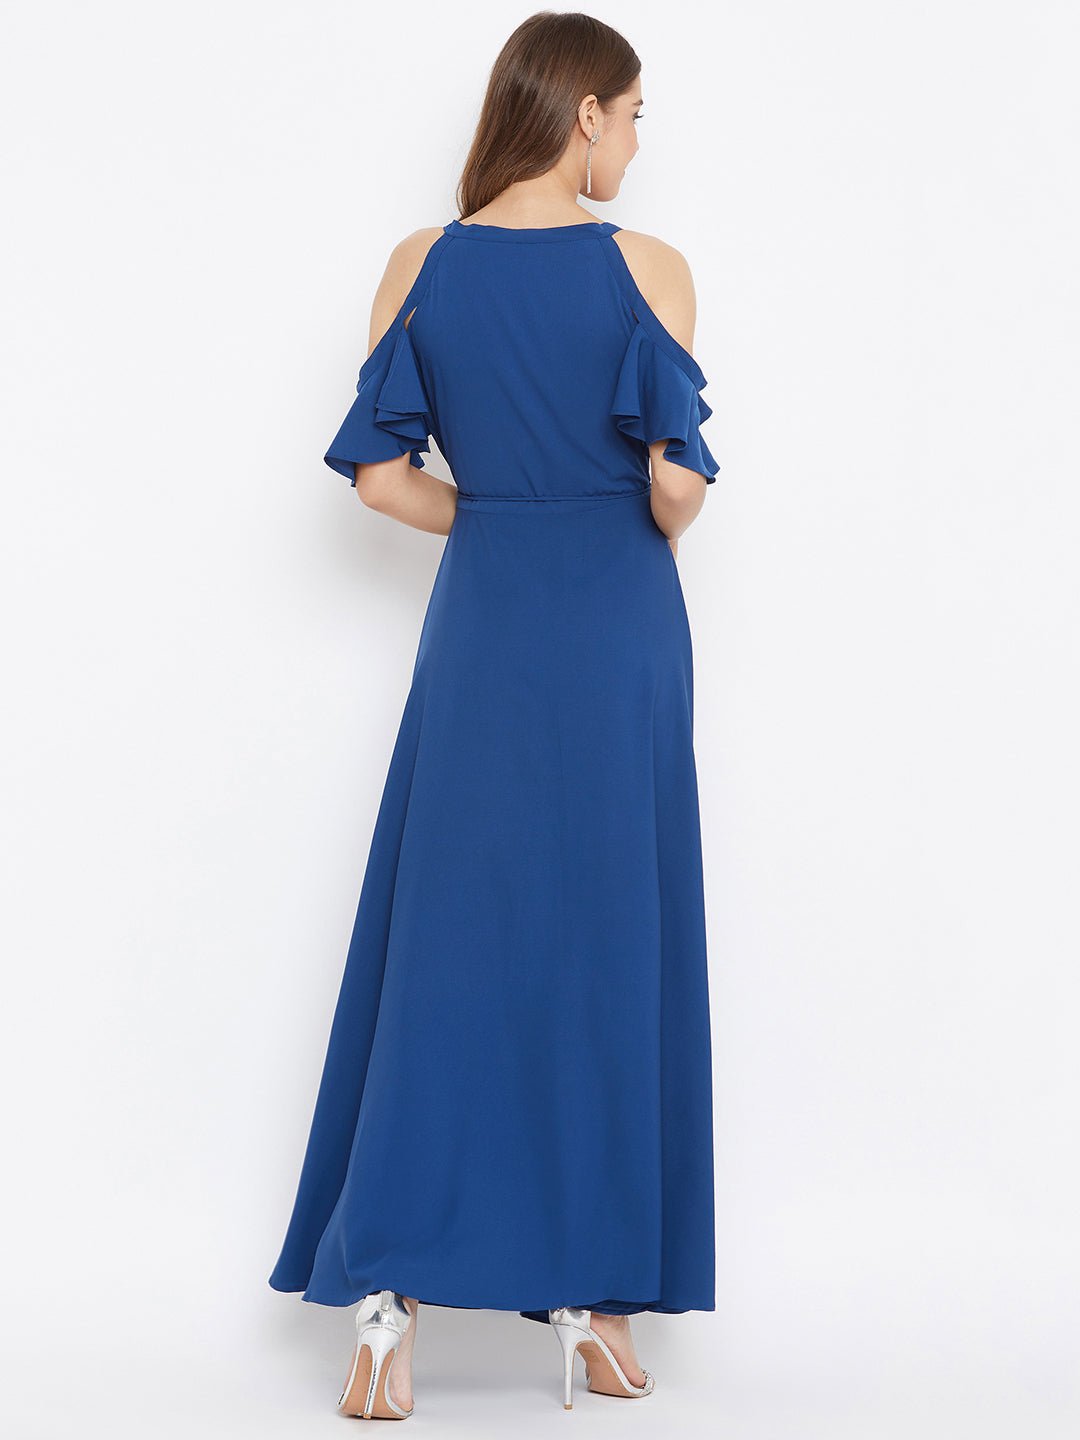 Folk Republic Women Solid Blue Cold Shoulder Wrap Maxi Dress - #folk republic#